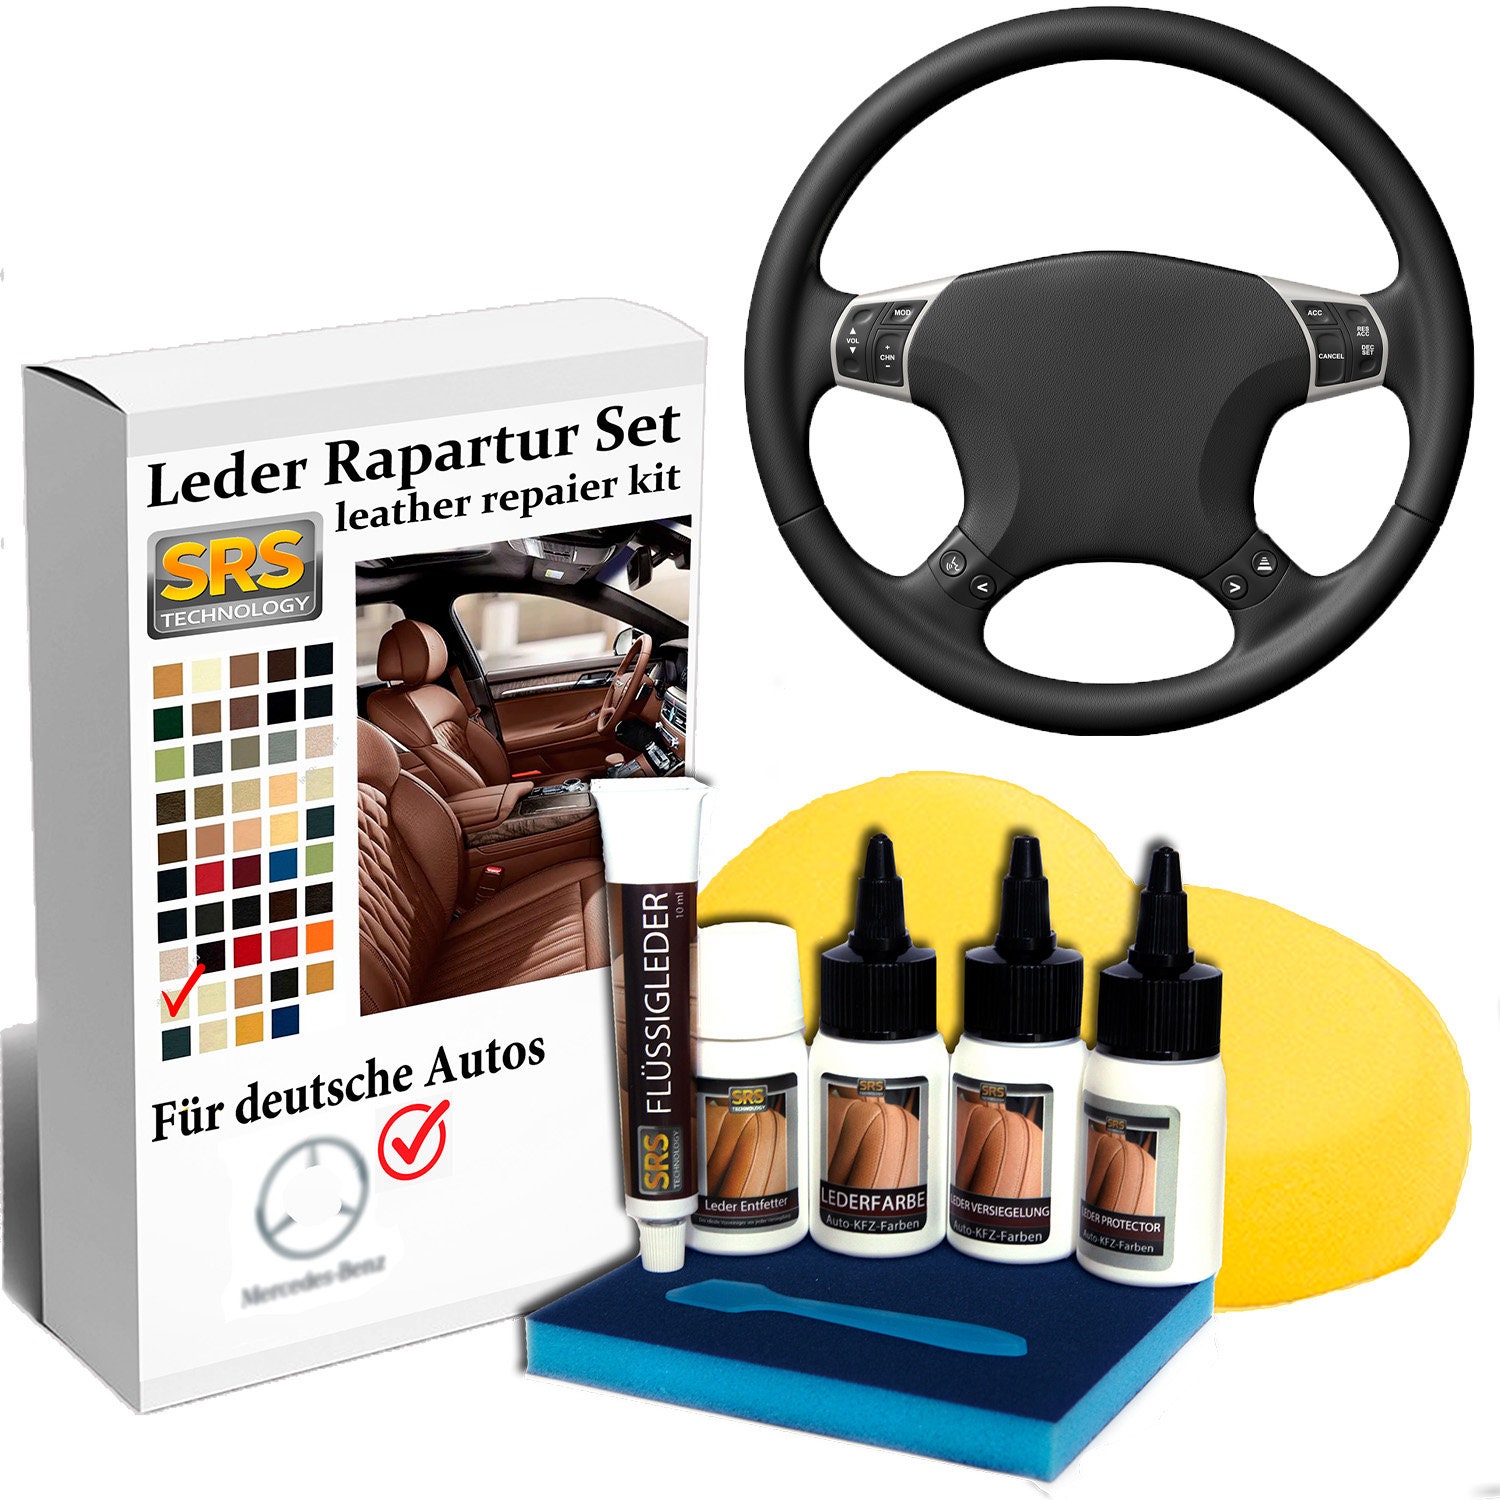 Leder reparatur Set für Lenkrad. BMW, Audi, Mercedes, schwarz. Lederfarbe.  Kit leather repair. Steering wheel repair. Leather color black. -   Schweiz